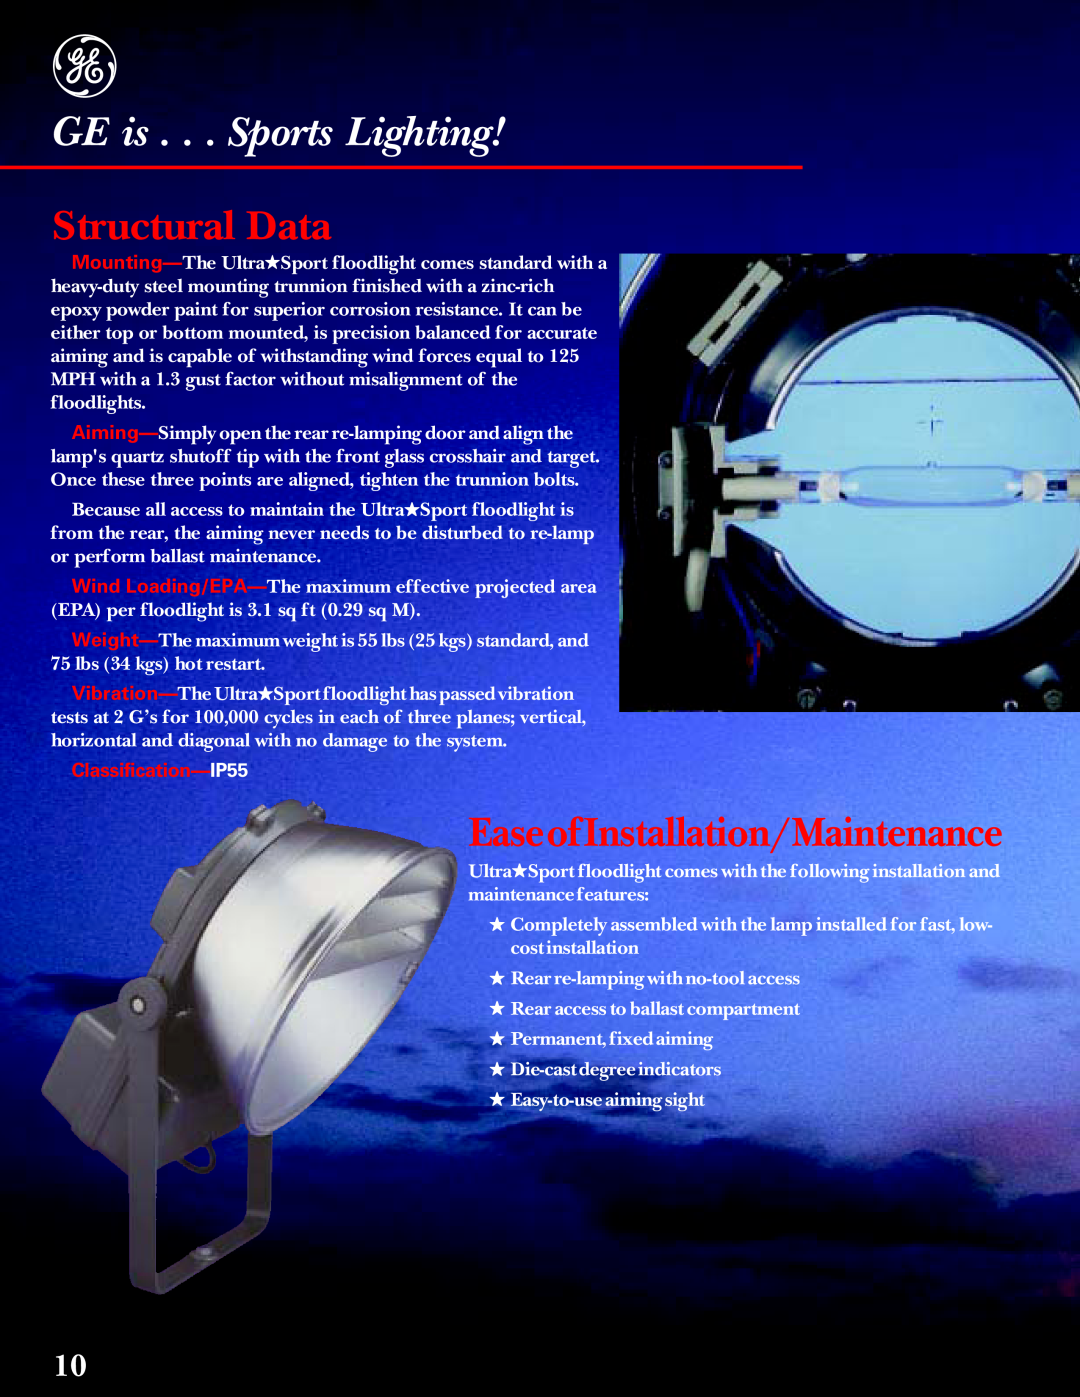 GE UltraSport manual Structural Data, EaseofInstallation/Maintenance, GE is . . . Sports Lighting 